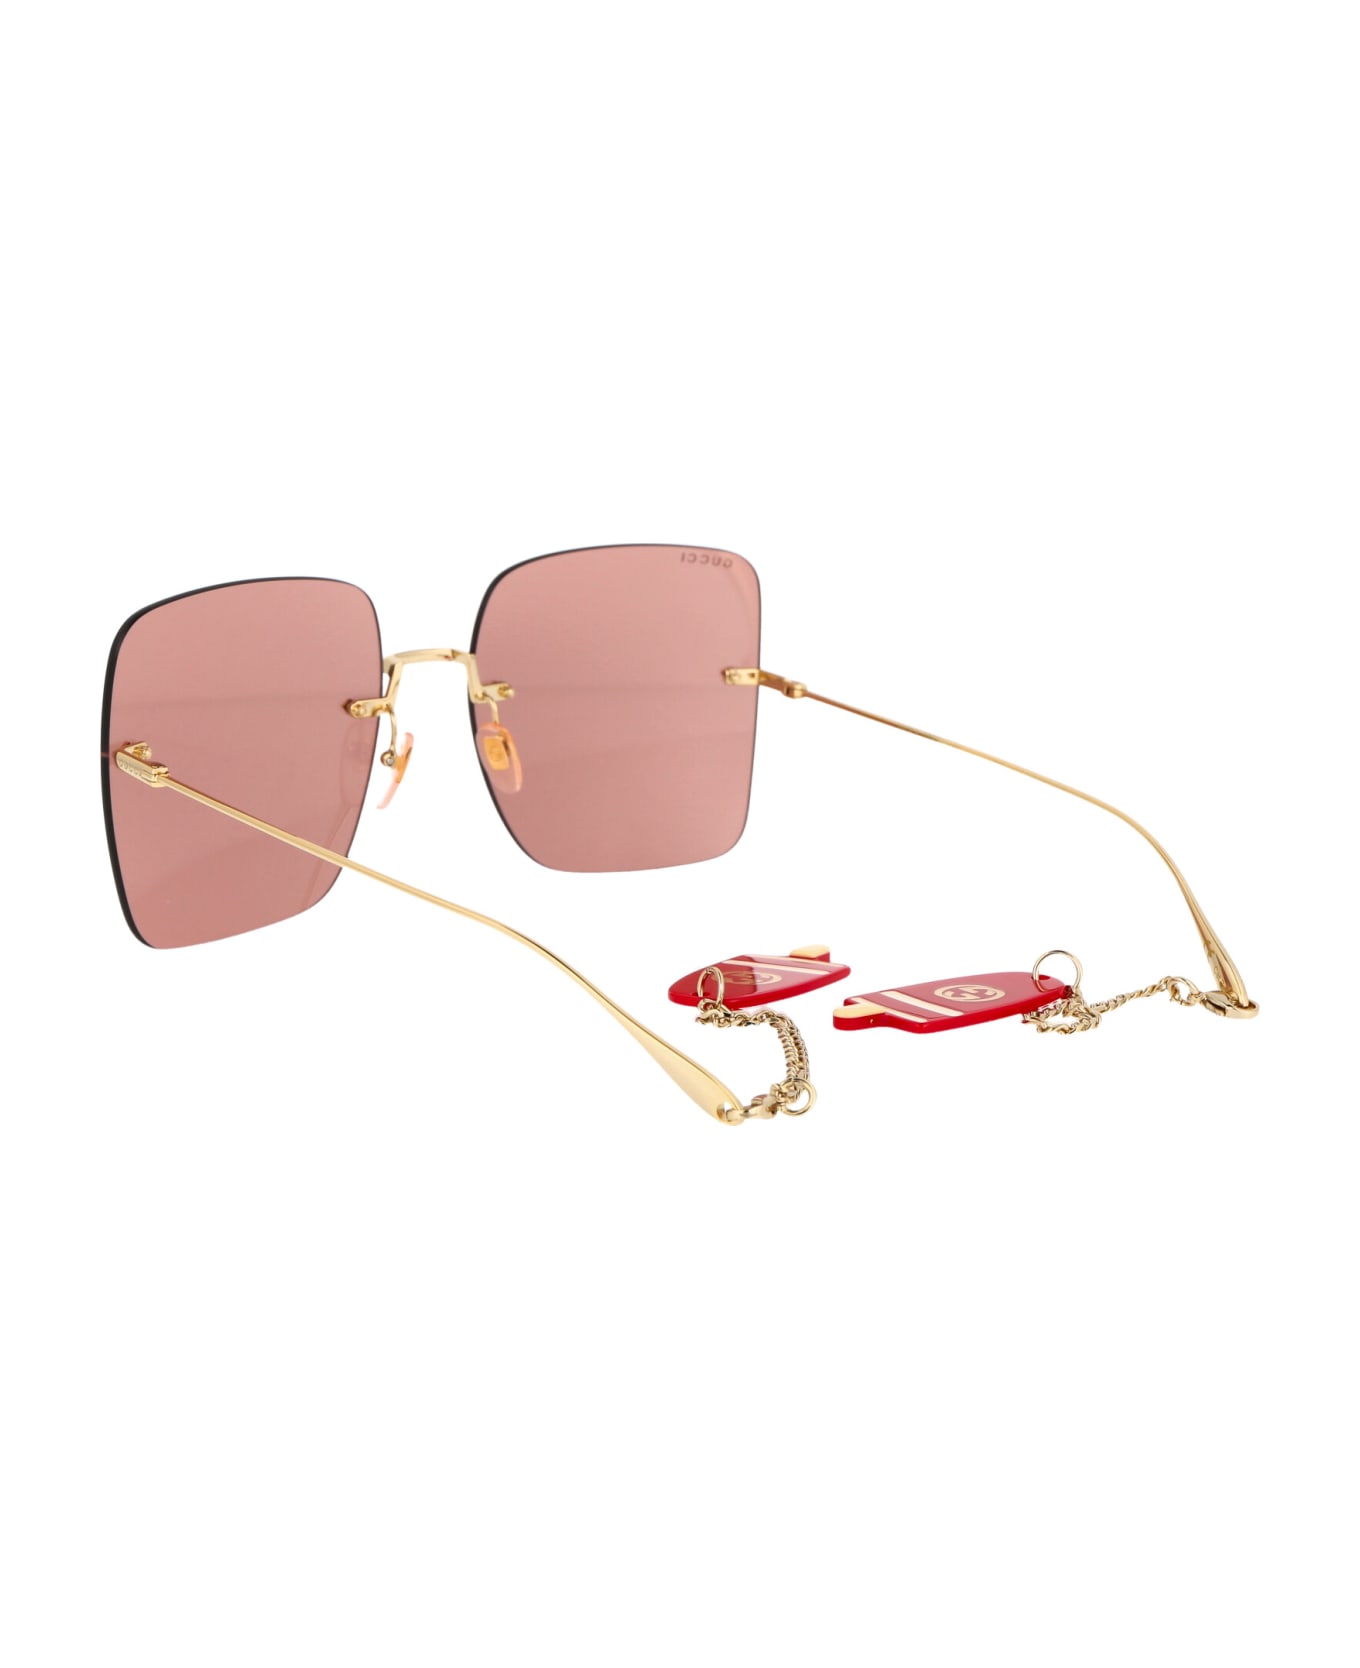 Gucci Eyewear Gg1147s Sunglasses - 005 GOLD GOLD RED